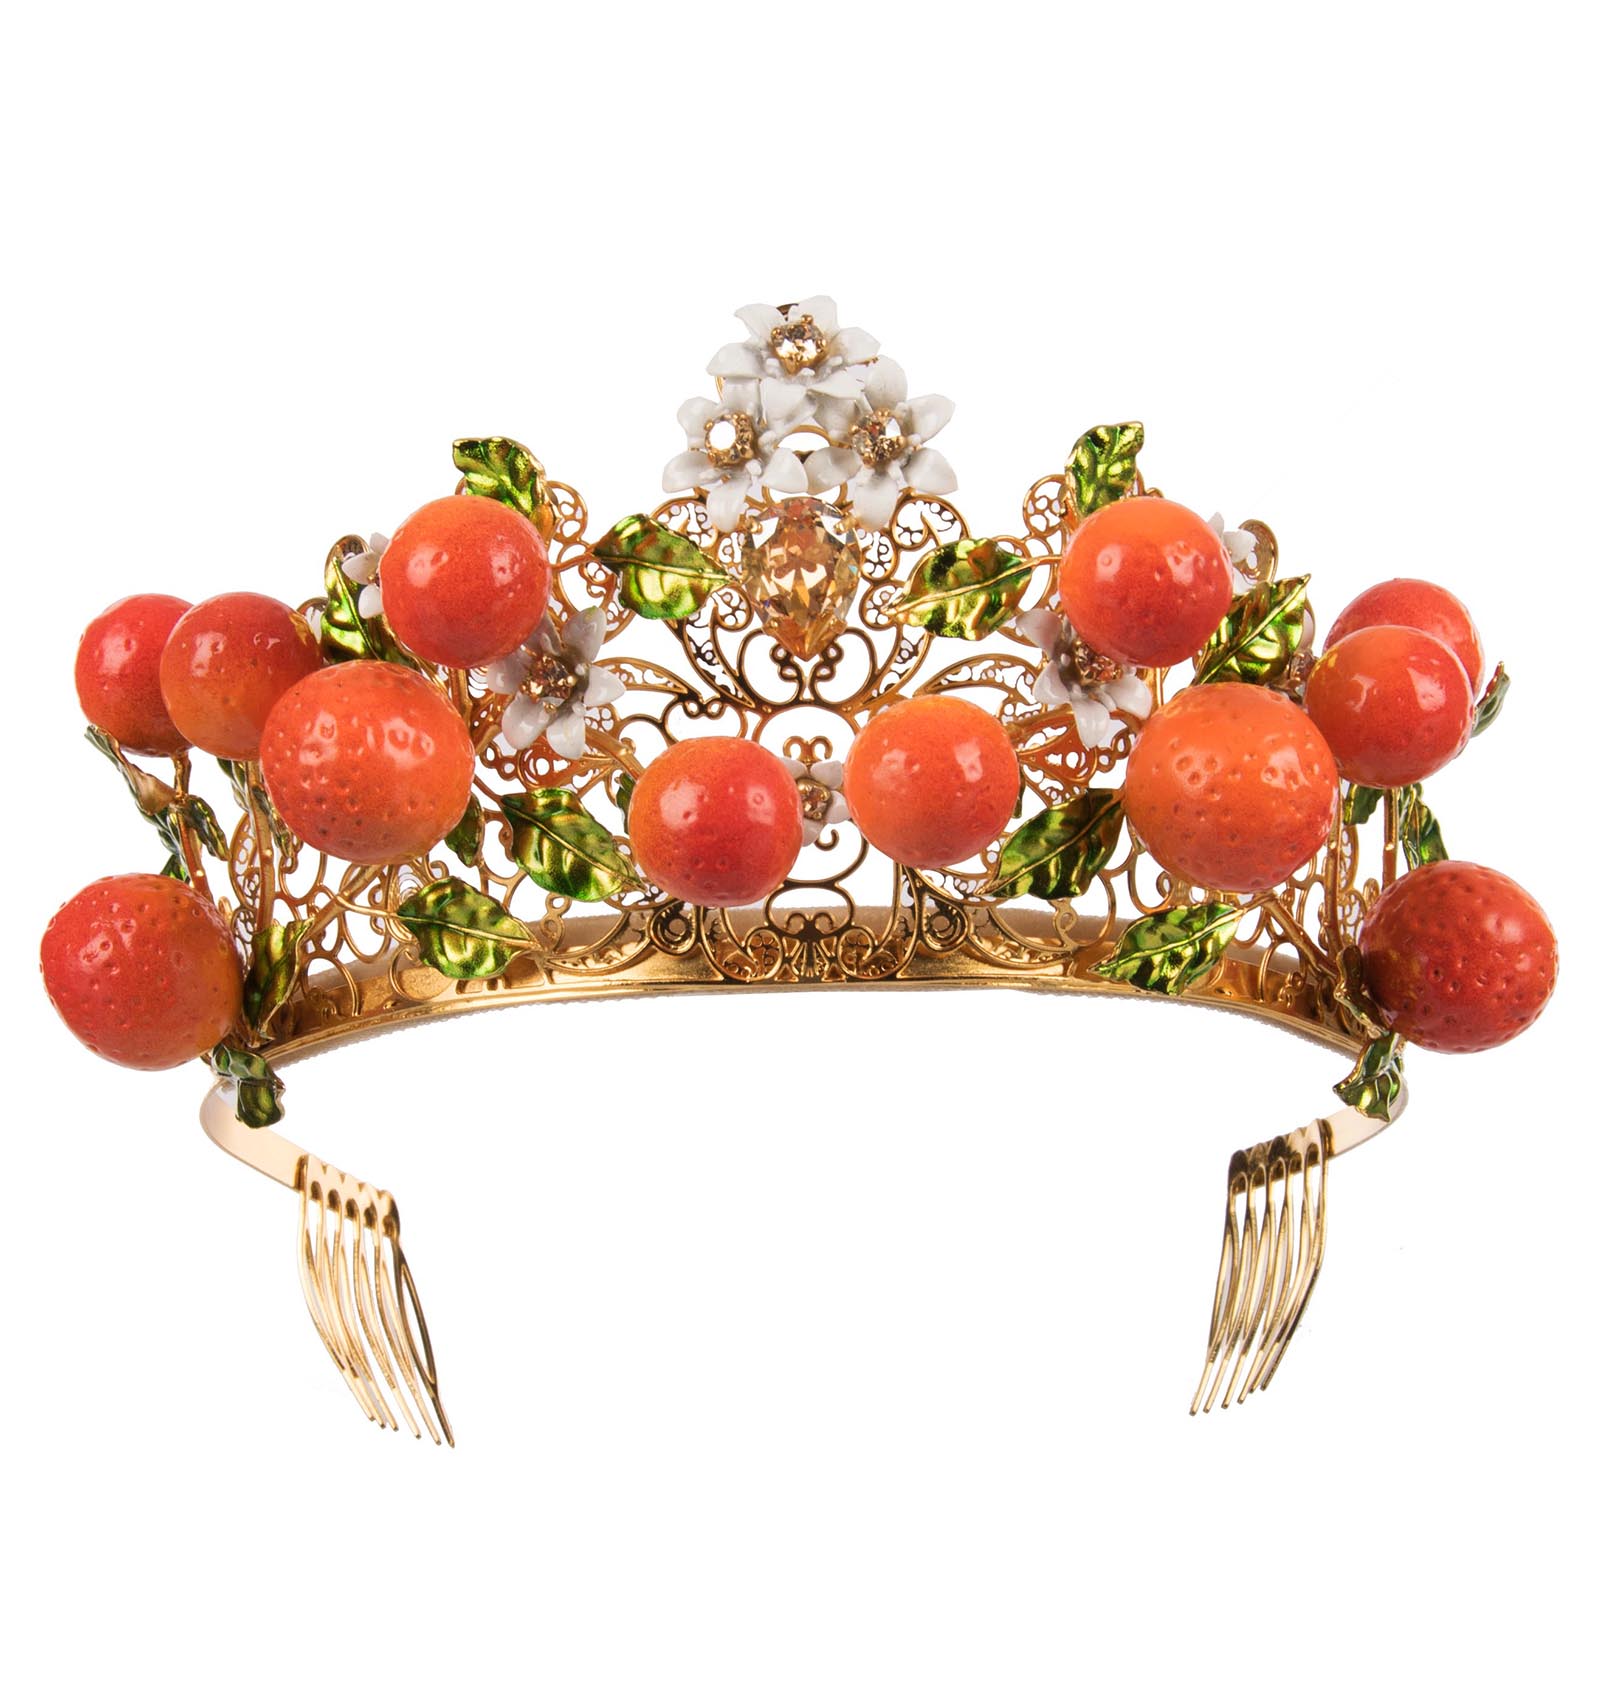 dolce and gabbana crown